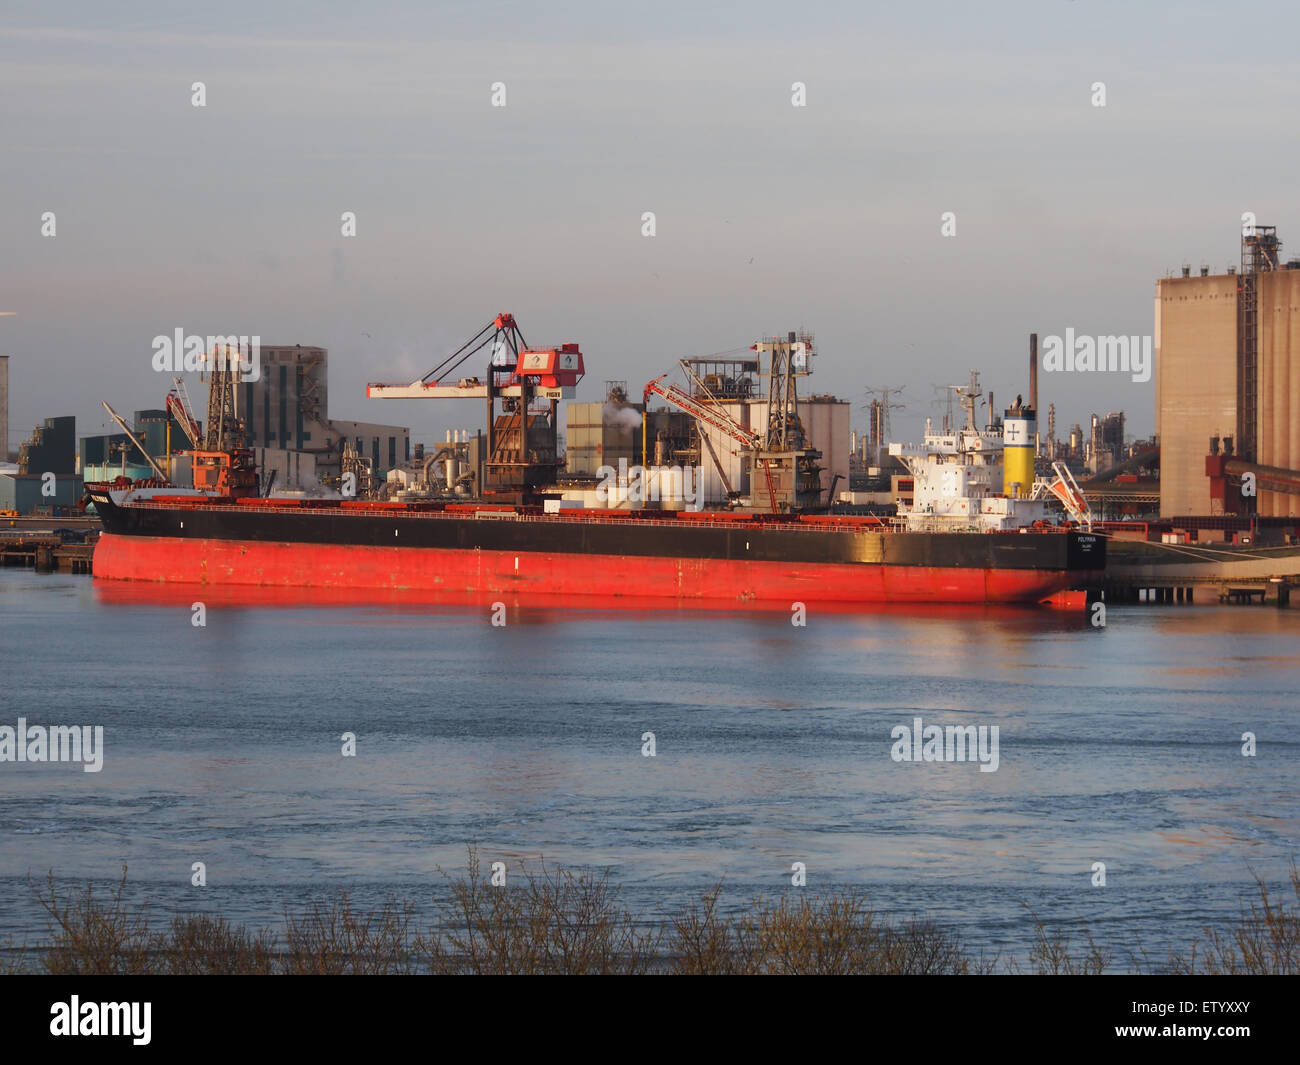 Polymnia - IMO 9598660, Beneluxhaven, Port of Rotterdam, pic1 Stock Photo